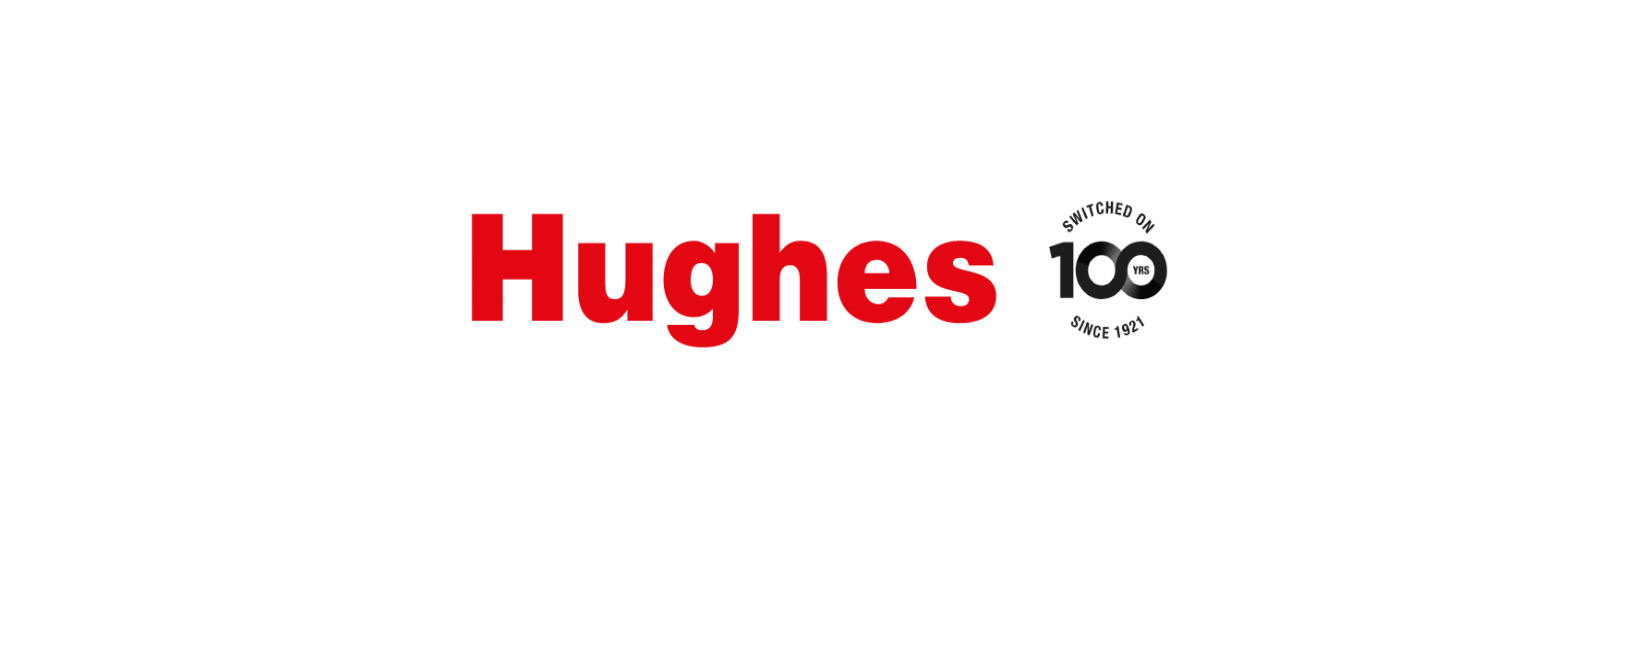 Hughes Discount Code 2022